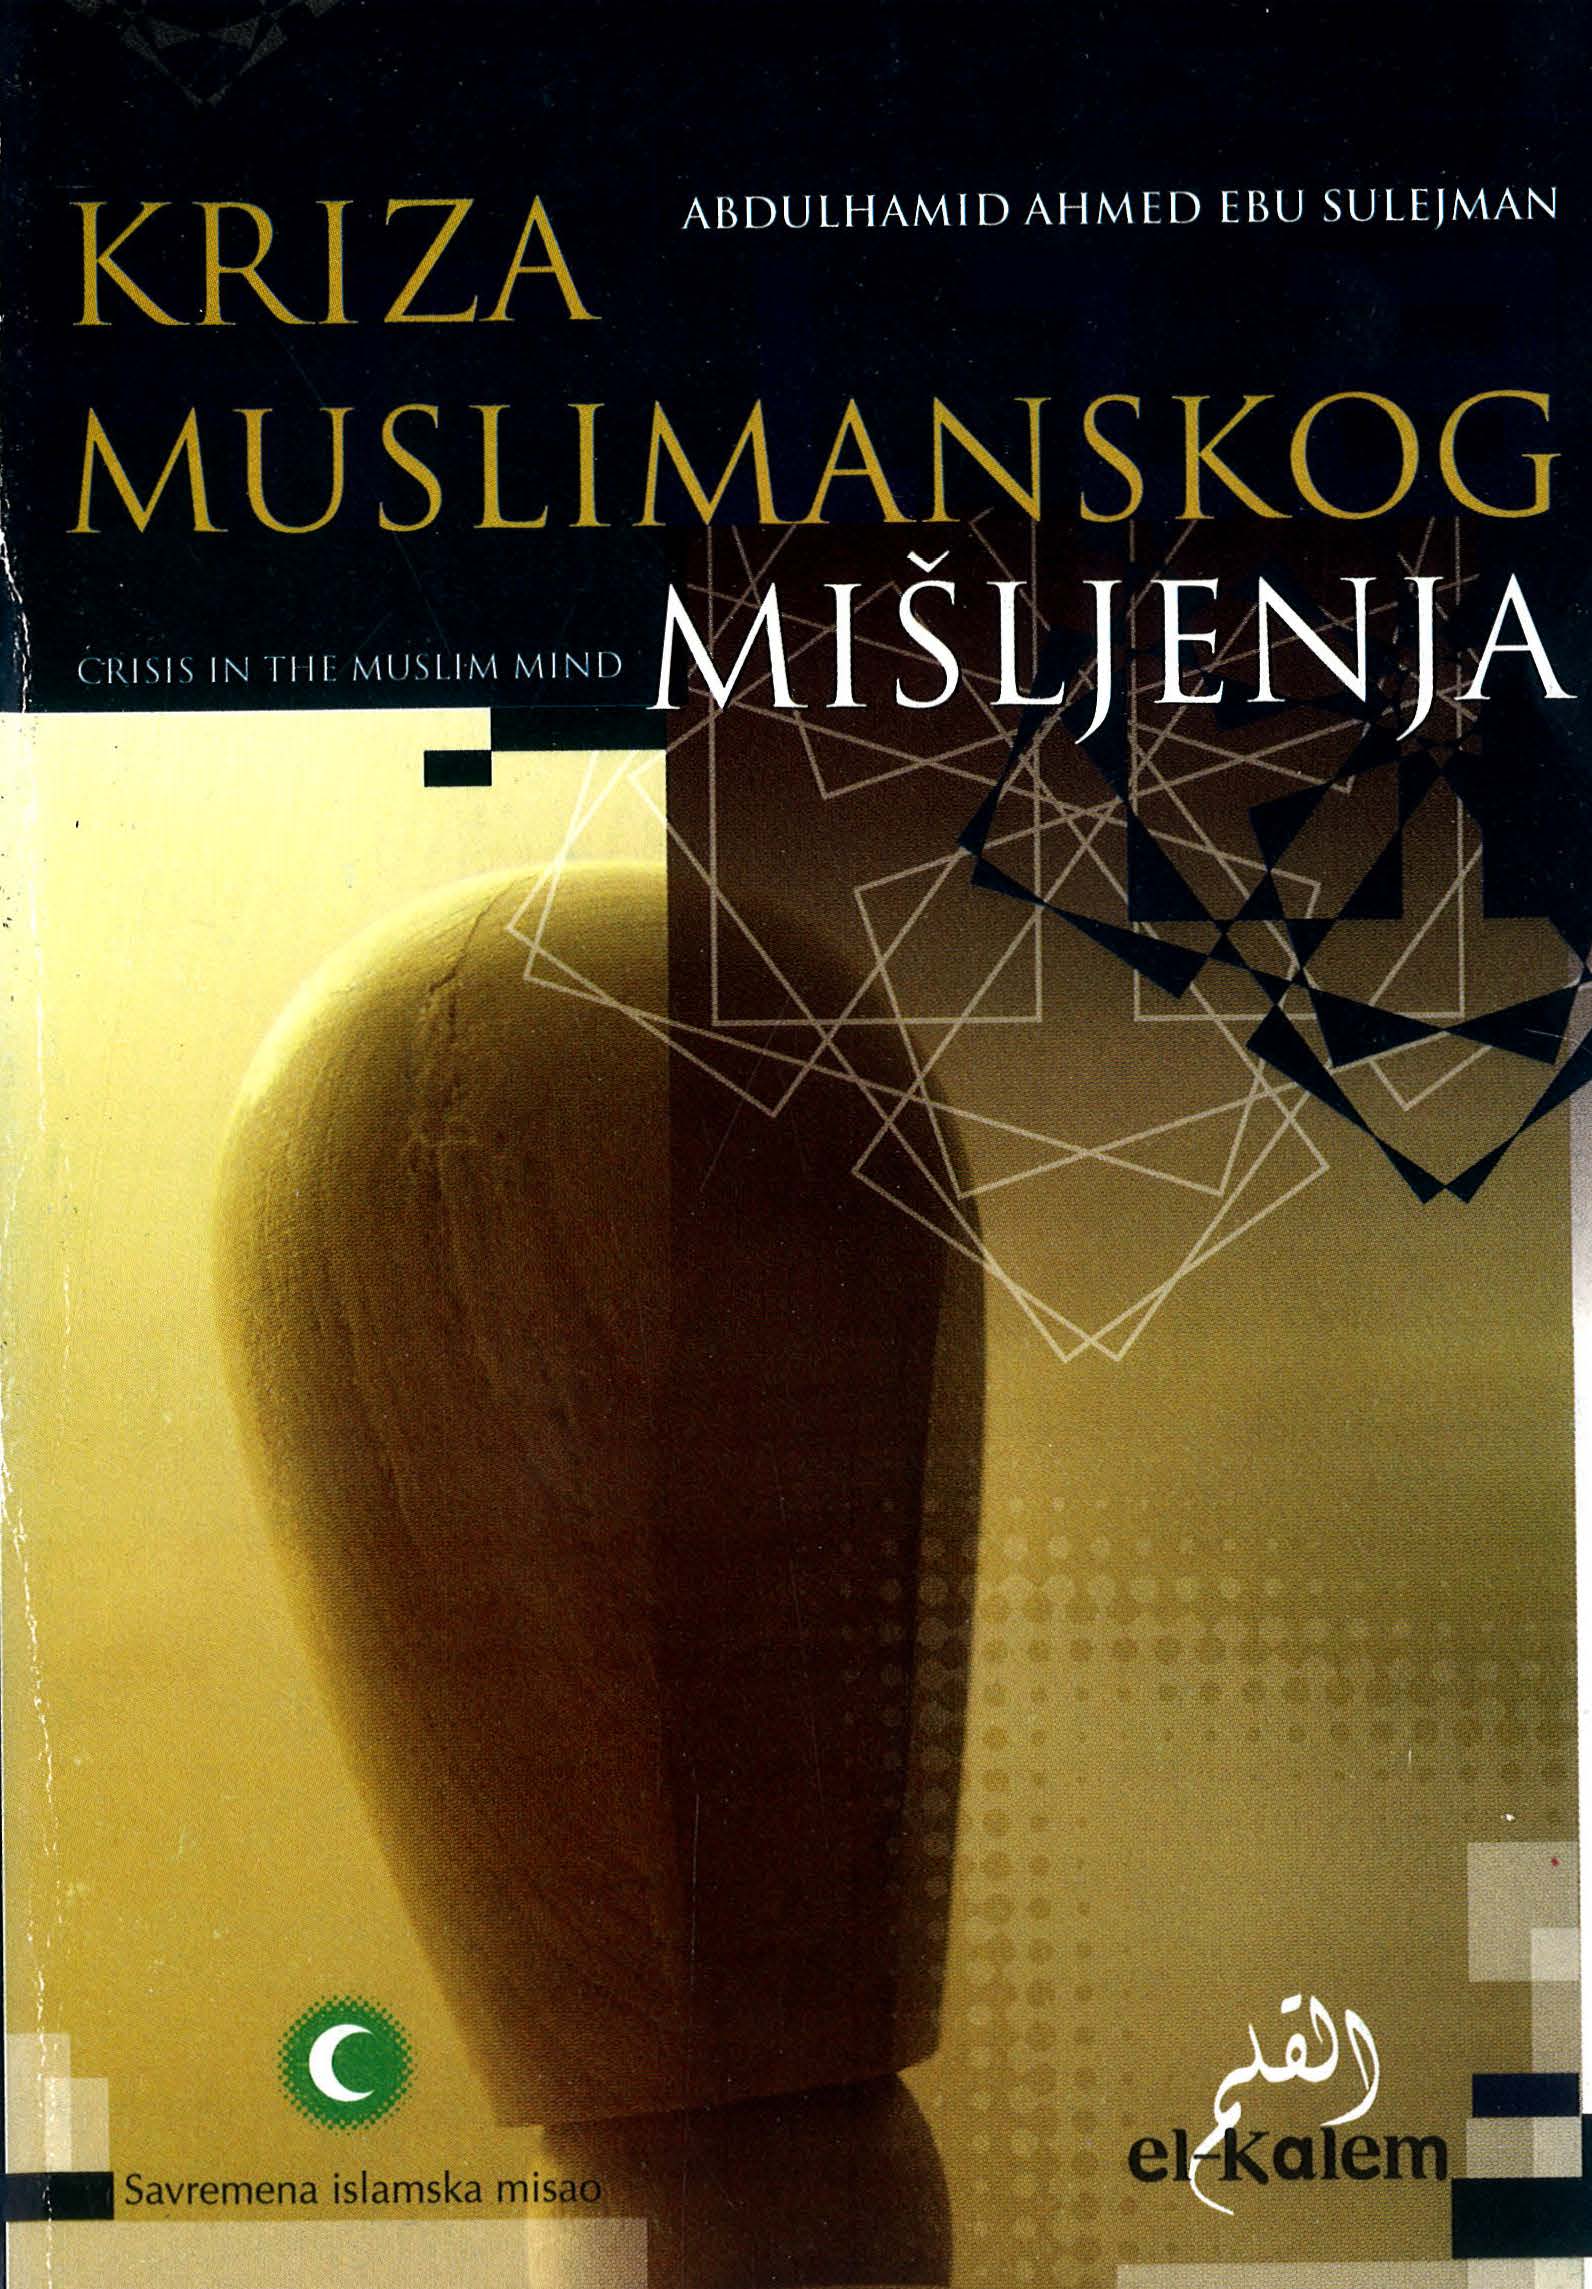 Bosnian Language: Kriza muslimanskog mišljenja (Crisis in the Muslim Mind)